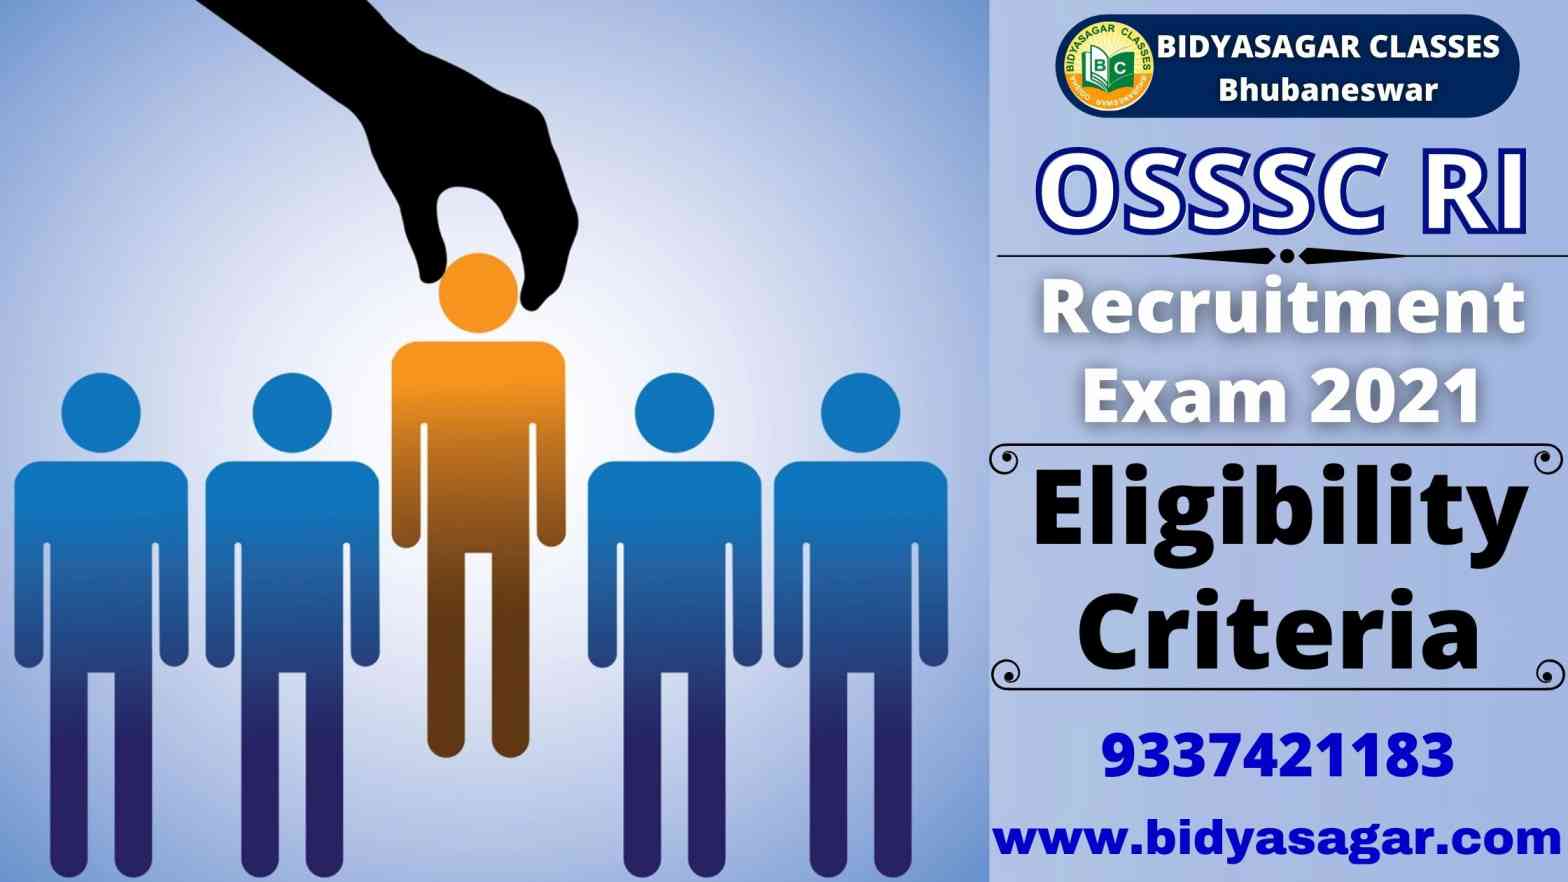 OSSSC RI Recruitment Exam 2021 Eligibility Criteria